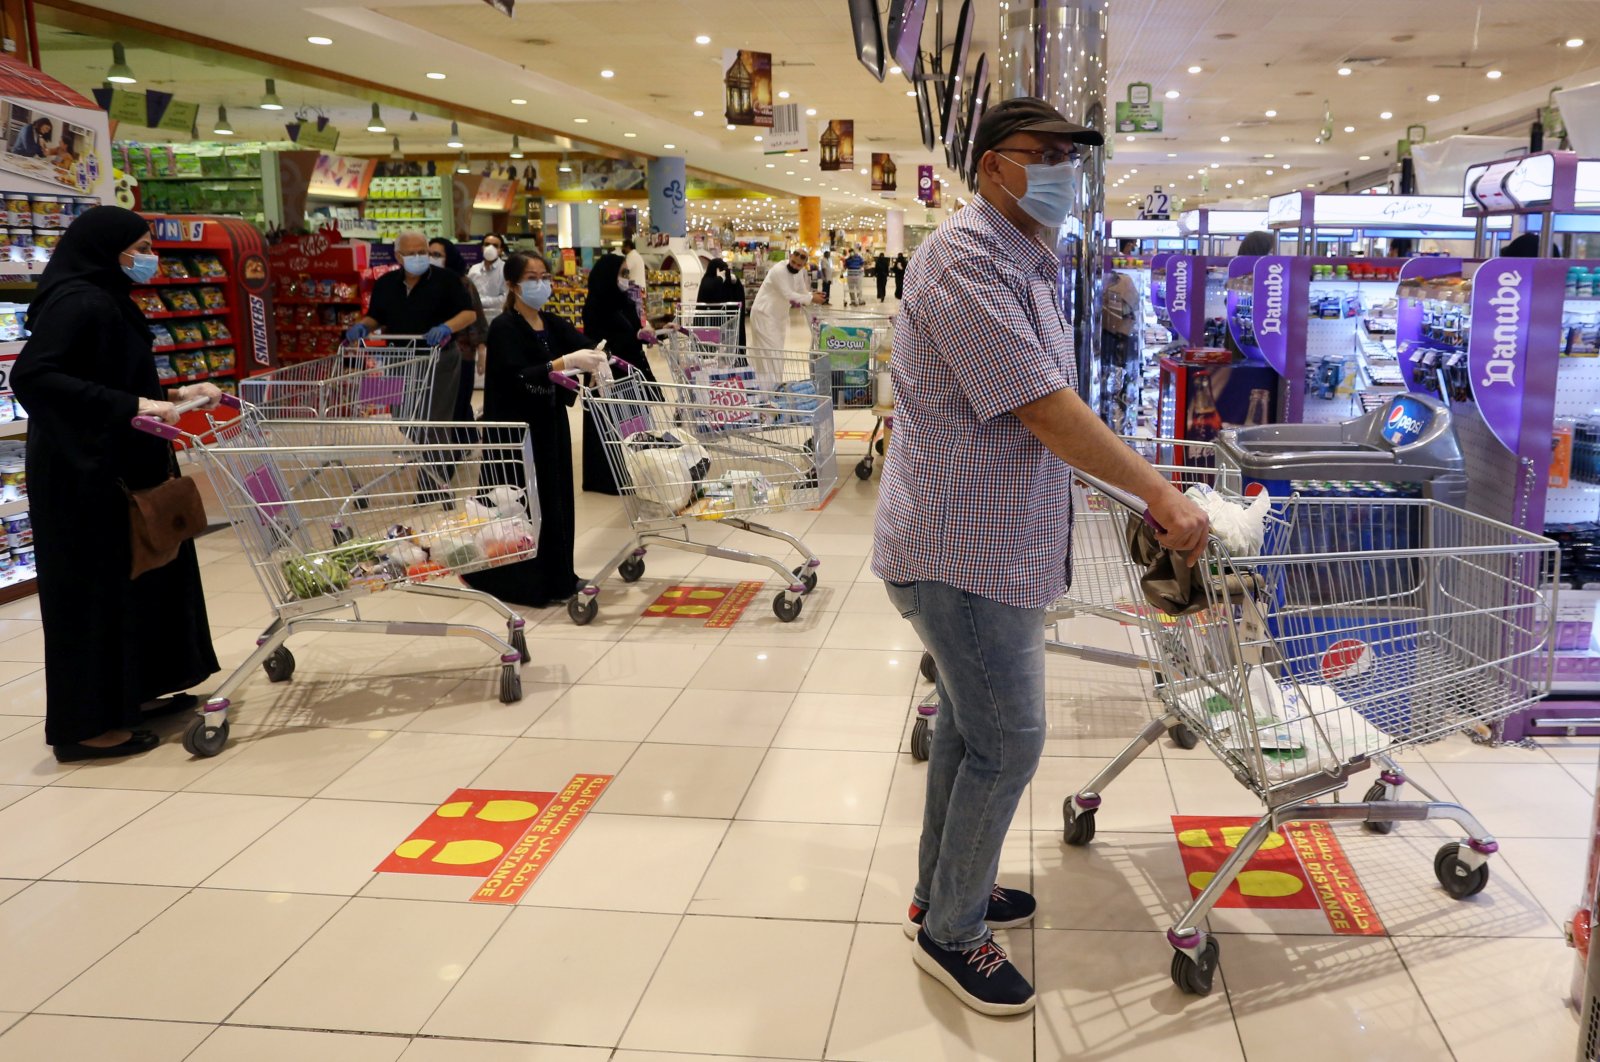 People follow social distancing markings as they line up at a shopping mall in Riyadh, Saudi Arabia, May 2, 2020. (Reuters Photo)